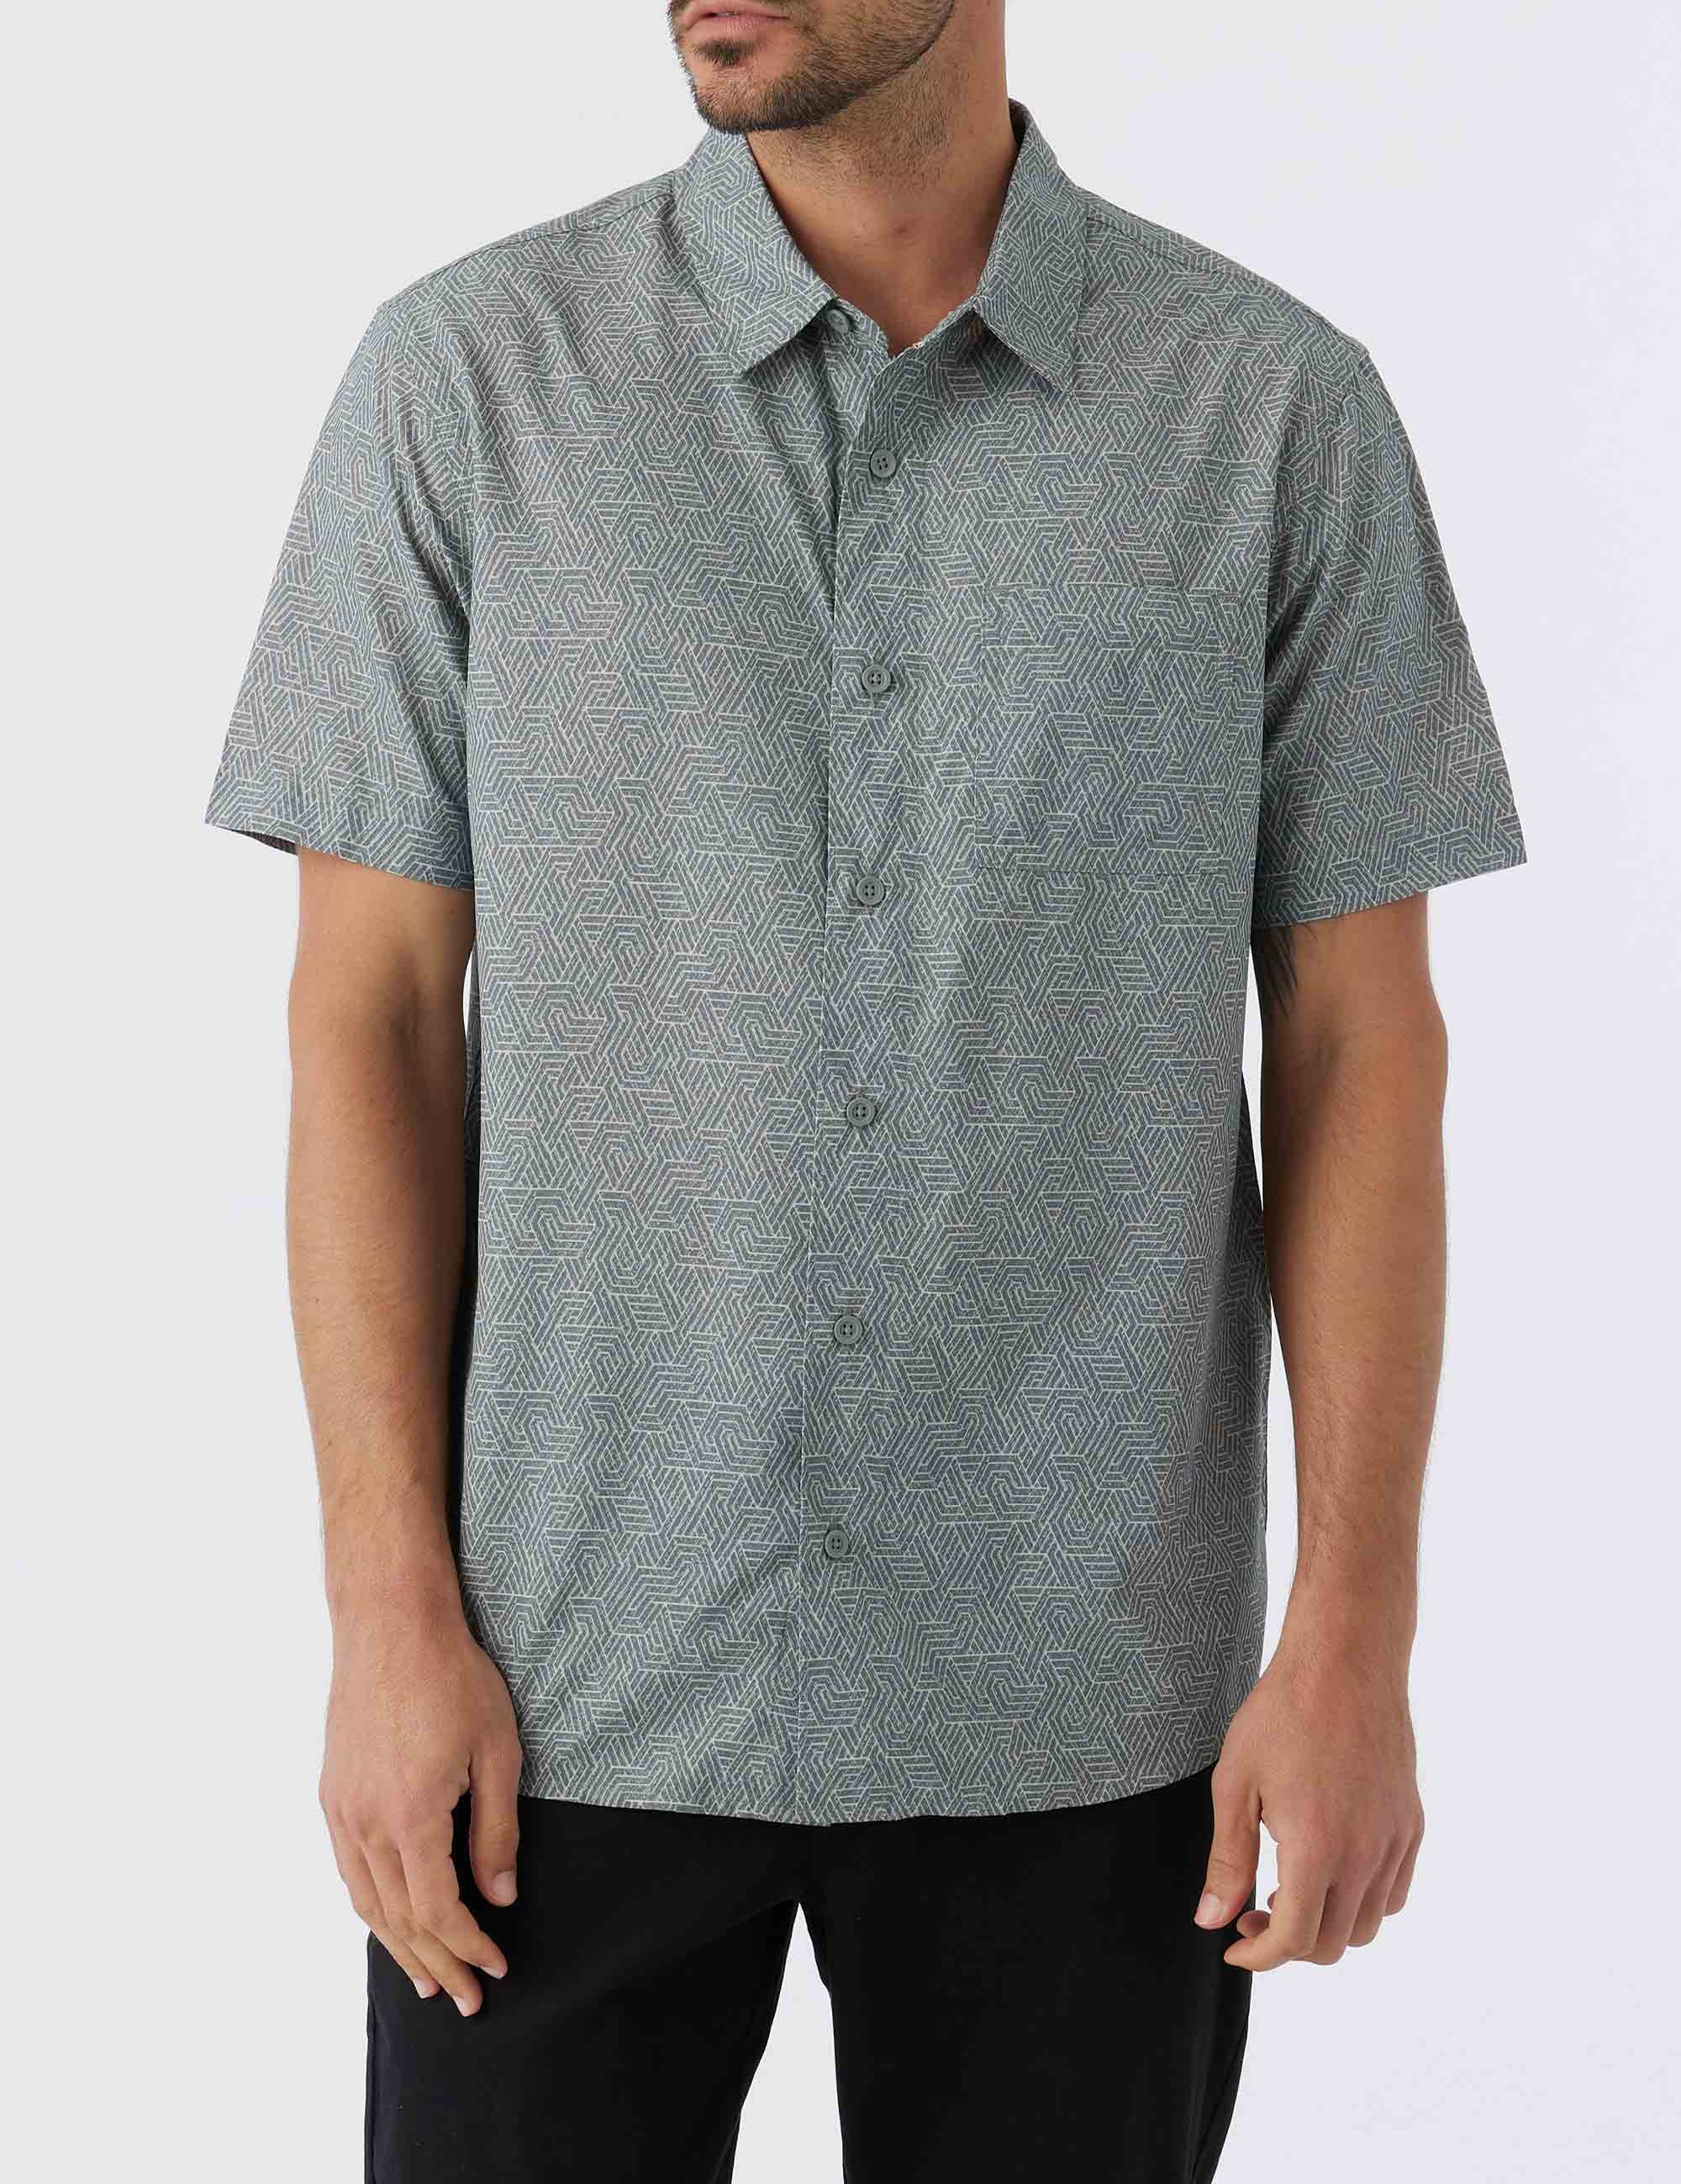 Men's Shirts - Button Ups & Flannels | Voyager Goods